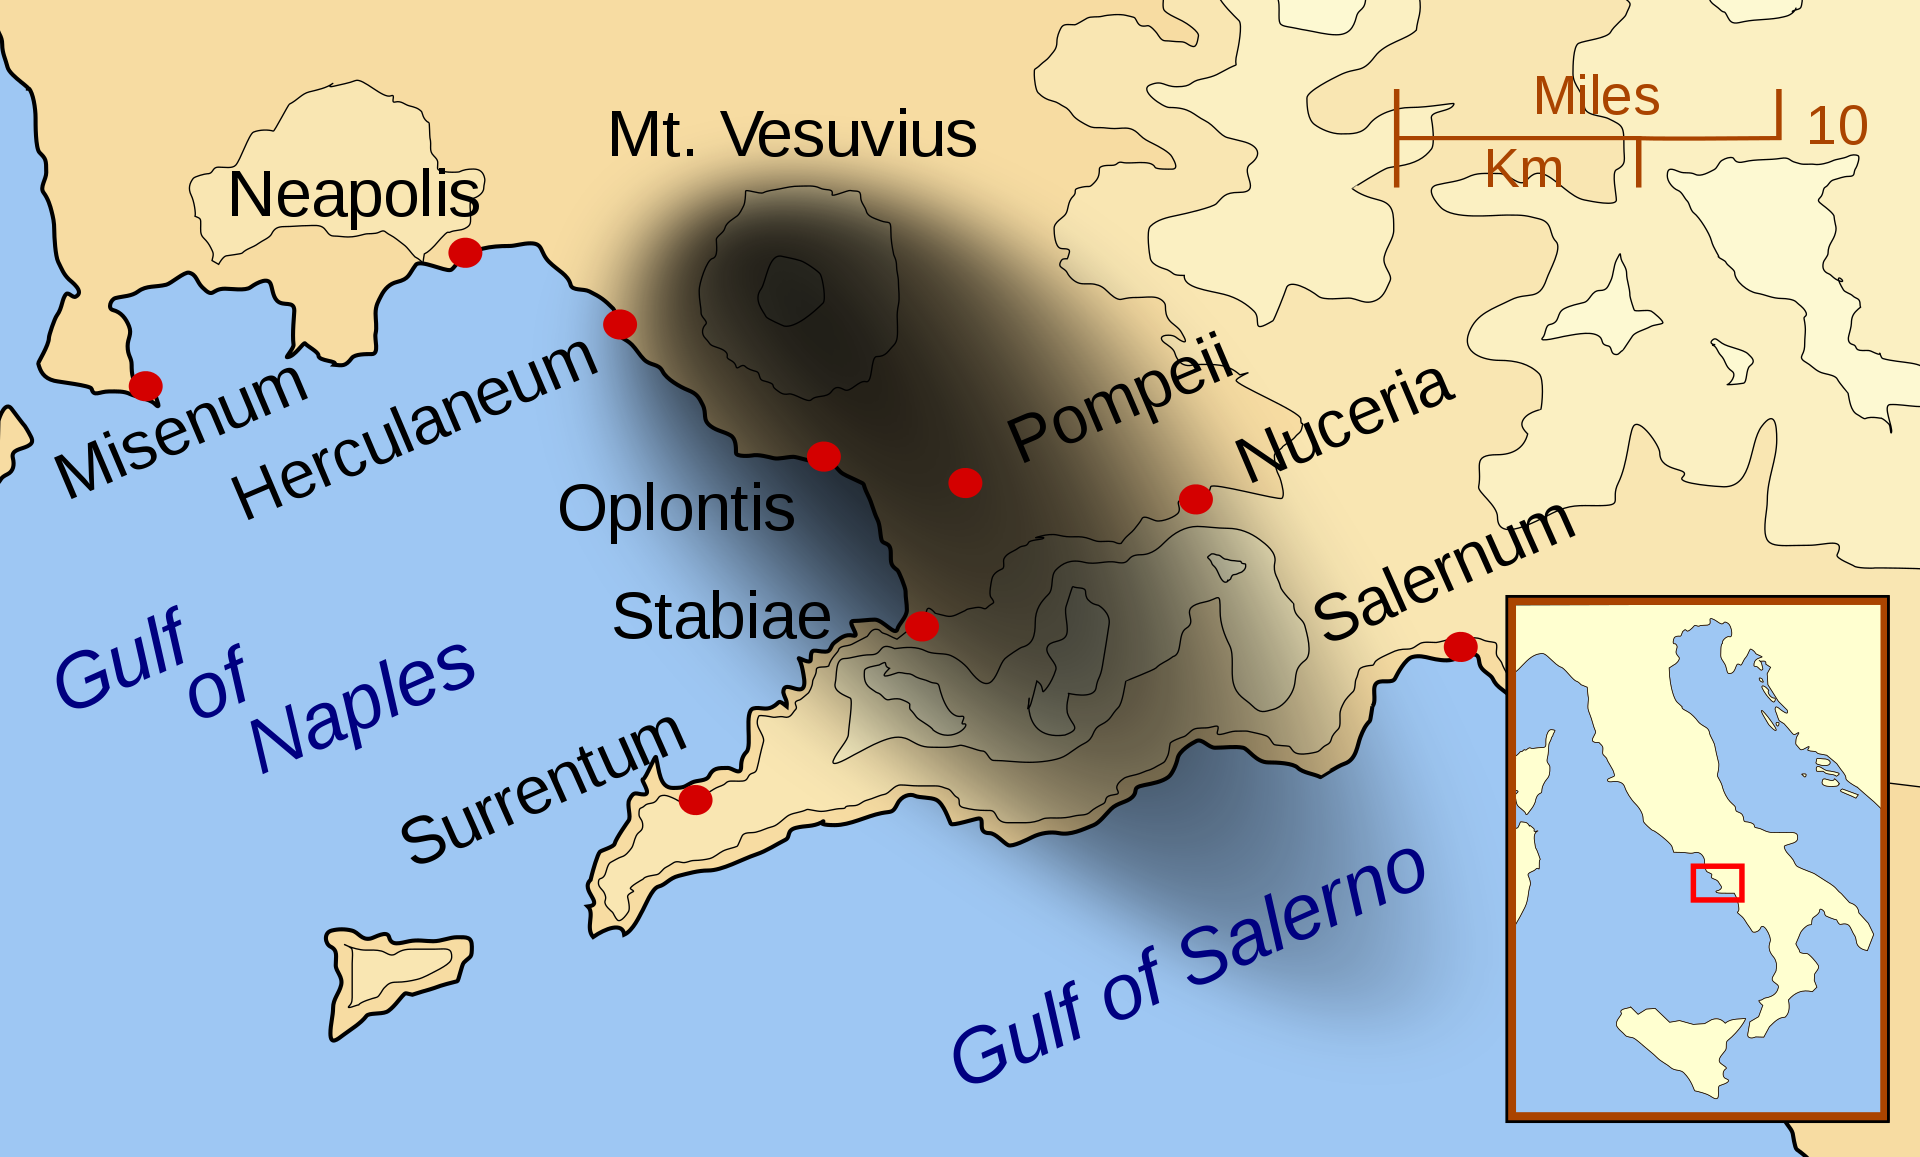 https://en.wikipedia.org/wiki/Pompeii#/media/File:Mt_Vesuvius_79_AD_eruption.svg